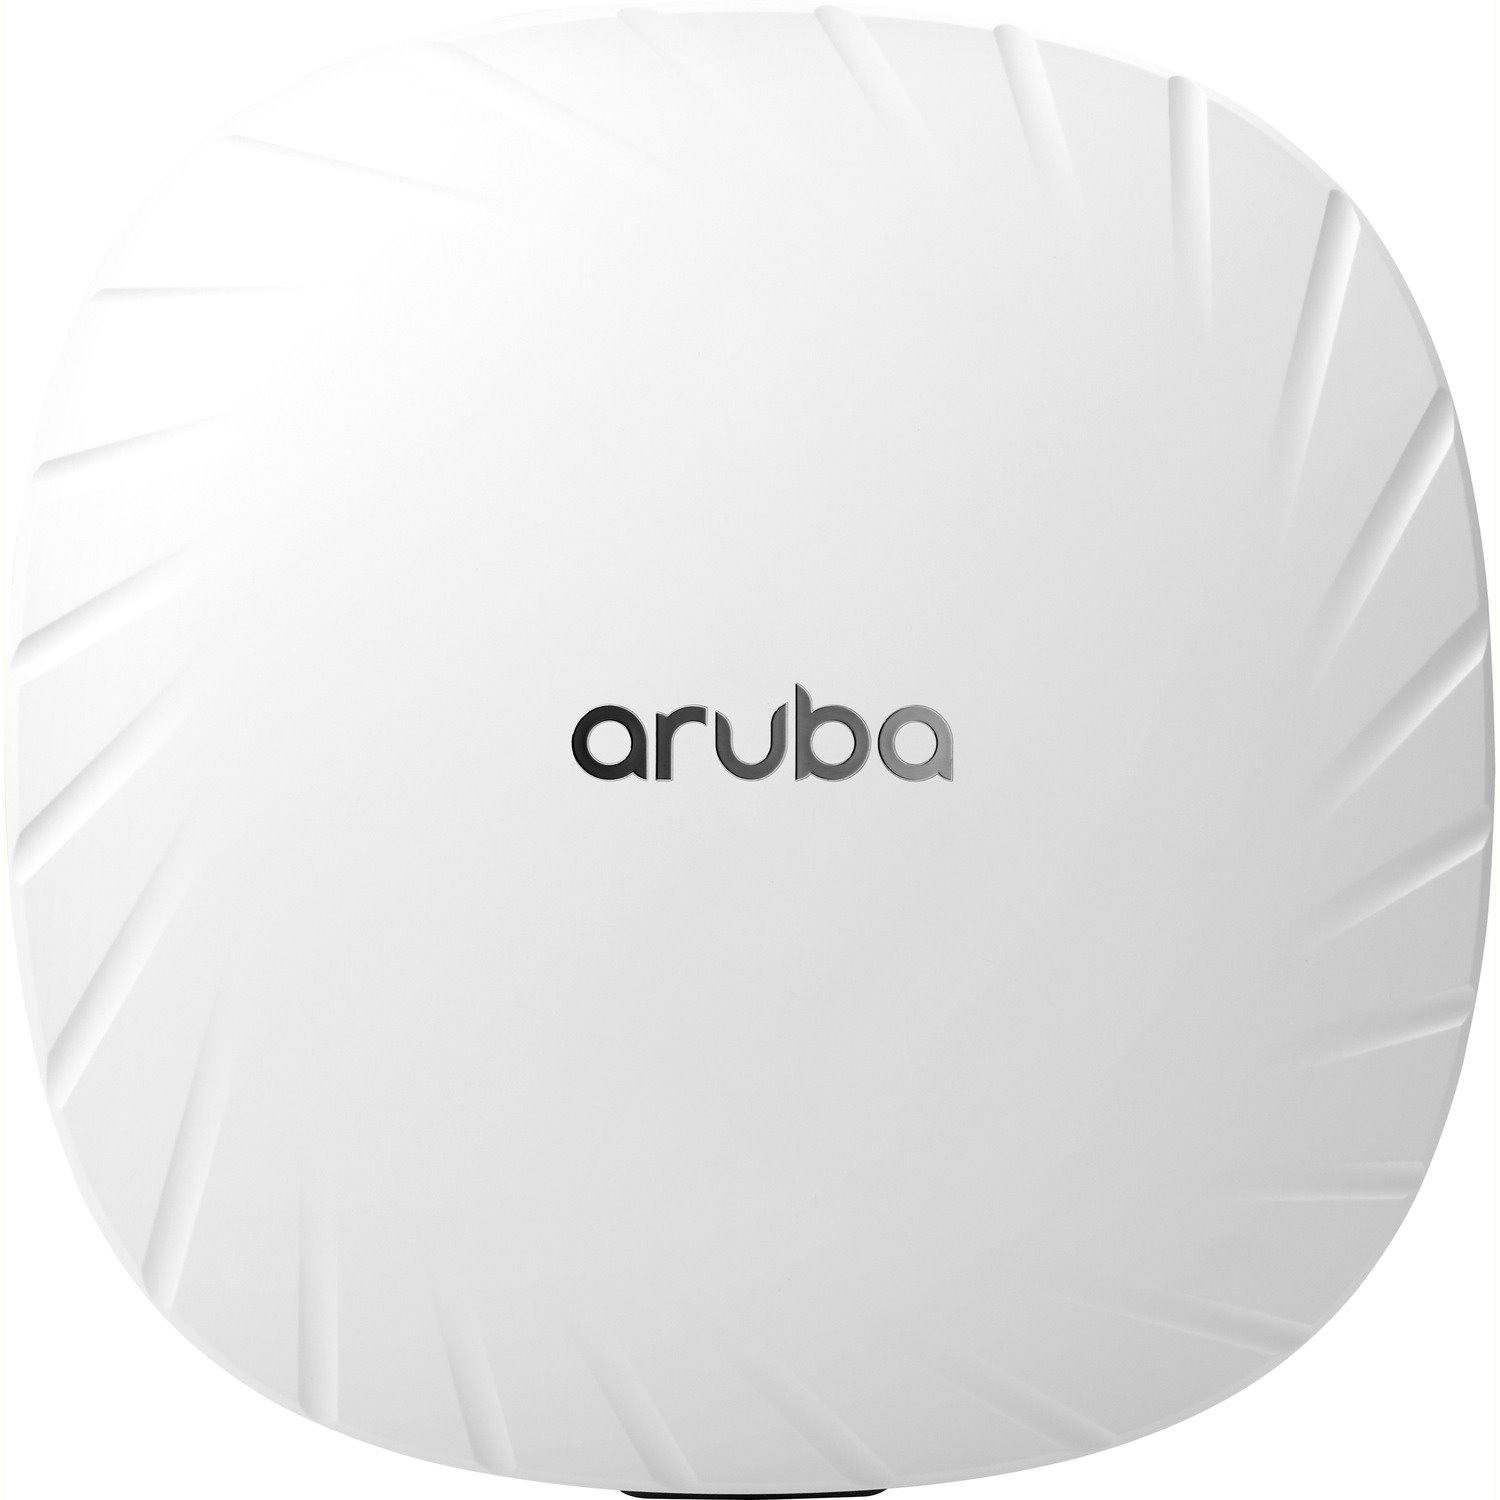 Aruba AP-515 802.11ax 2.69Gbit/s Indoor Wireless Access Point  - dual radio, 5GHz 4x4:4 and 2.4GHz 2x2:2 MIMO